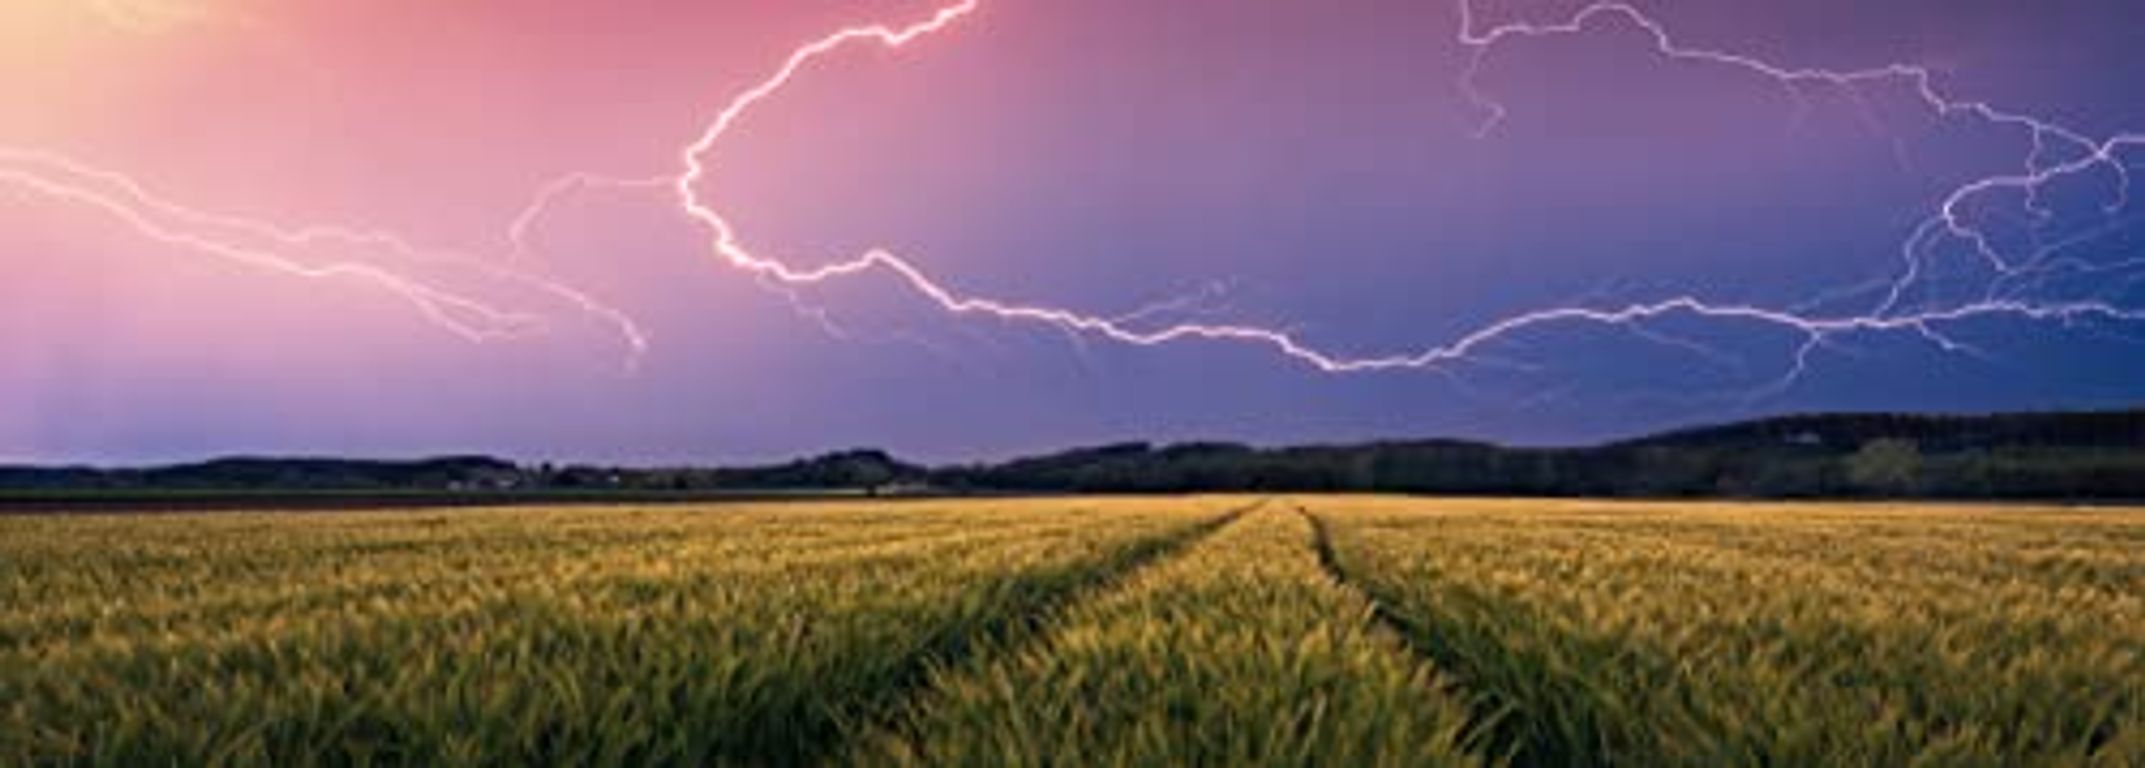 Nature Edition - Summer Thunderstorm